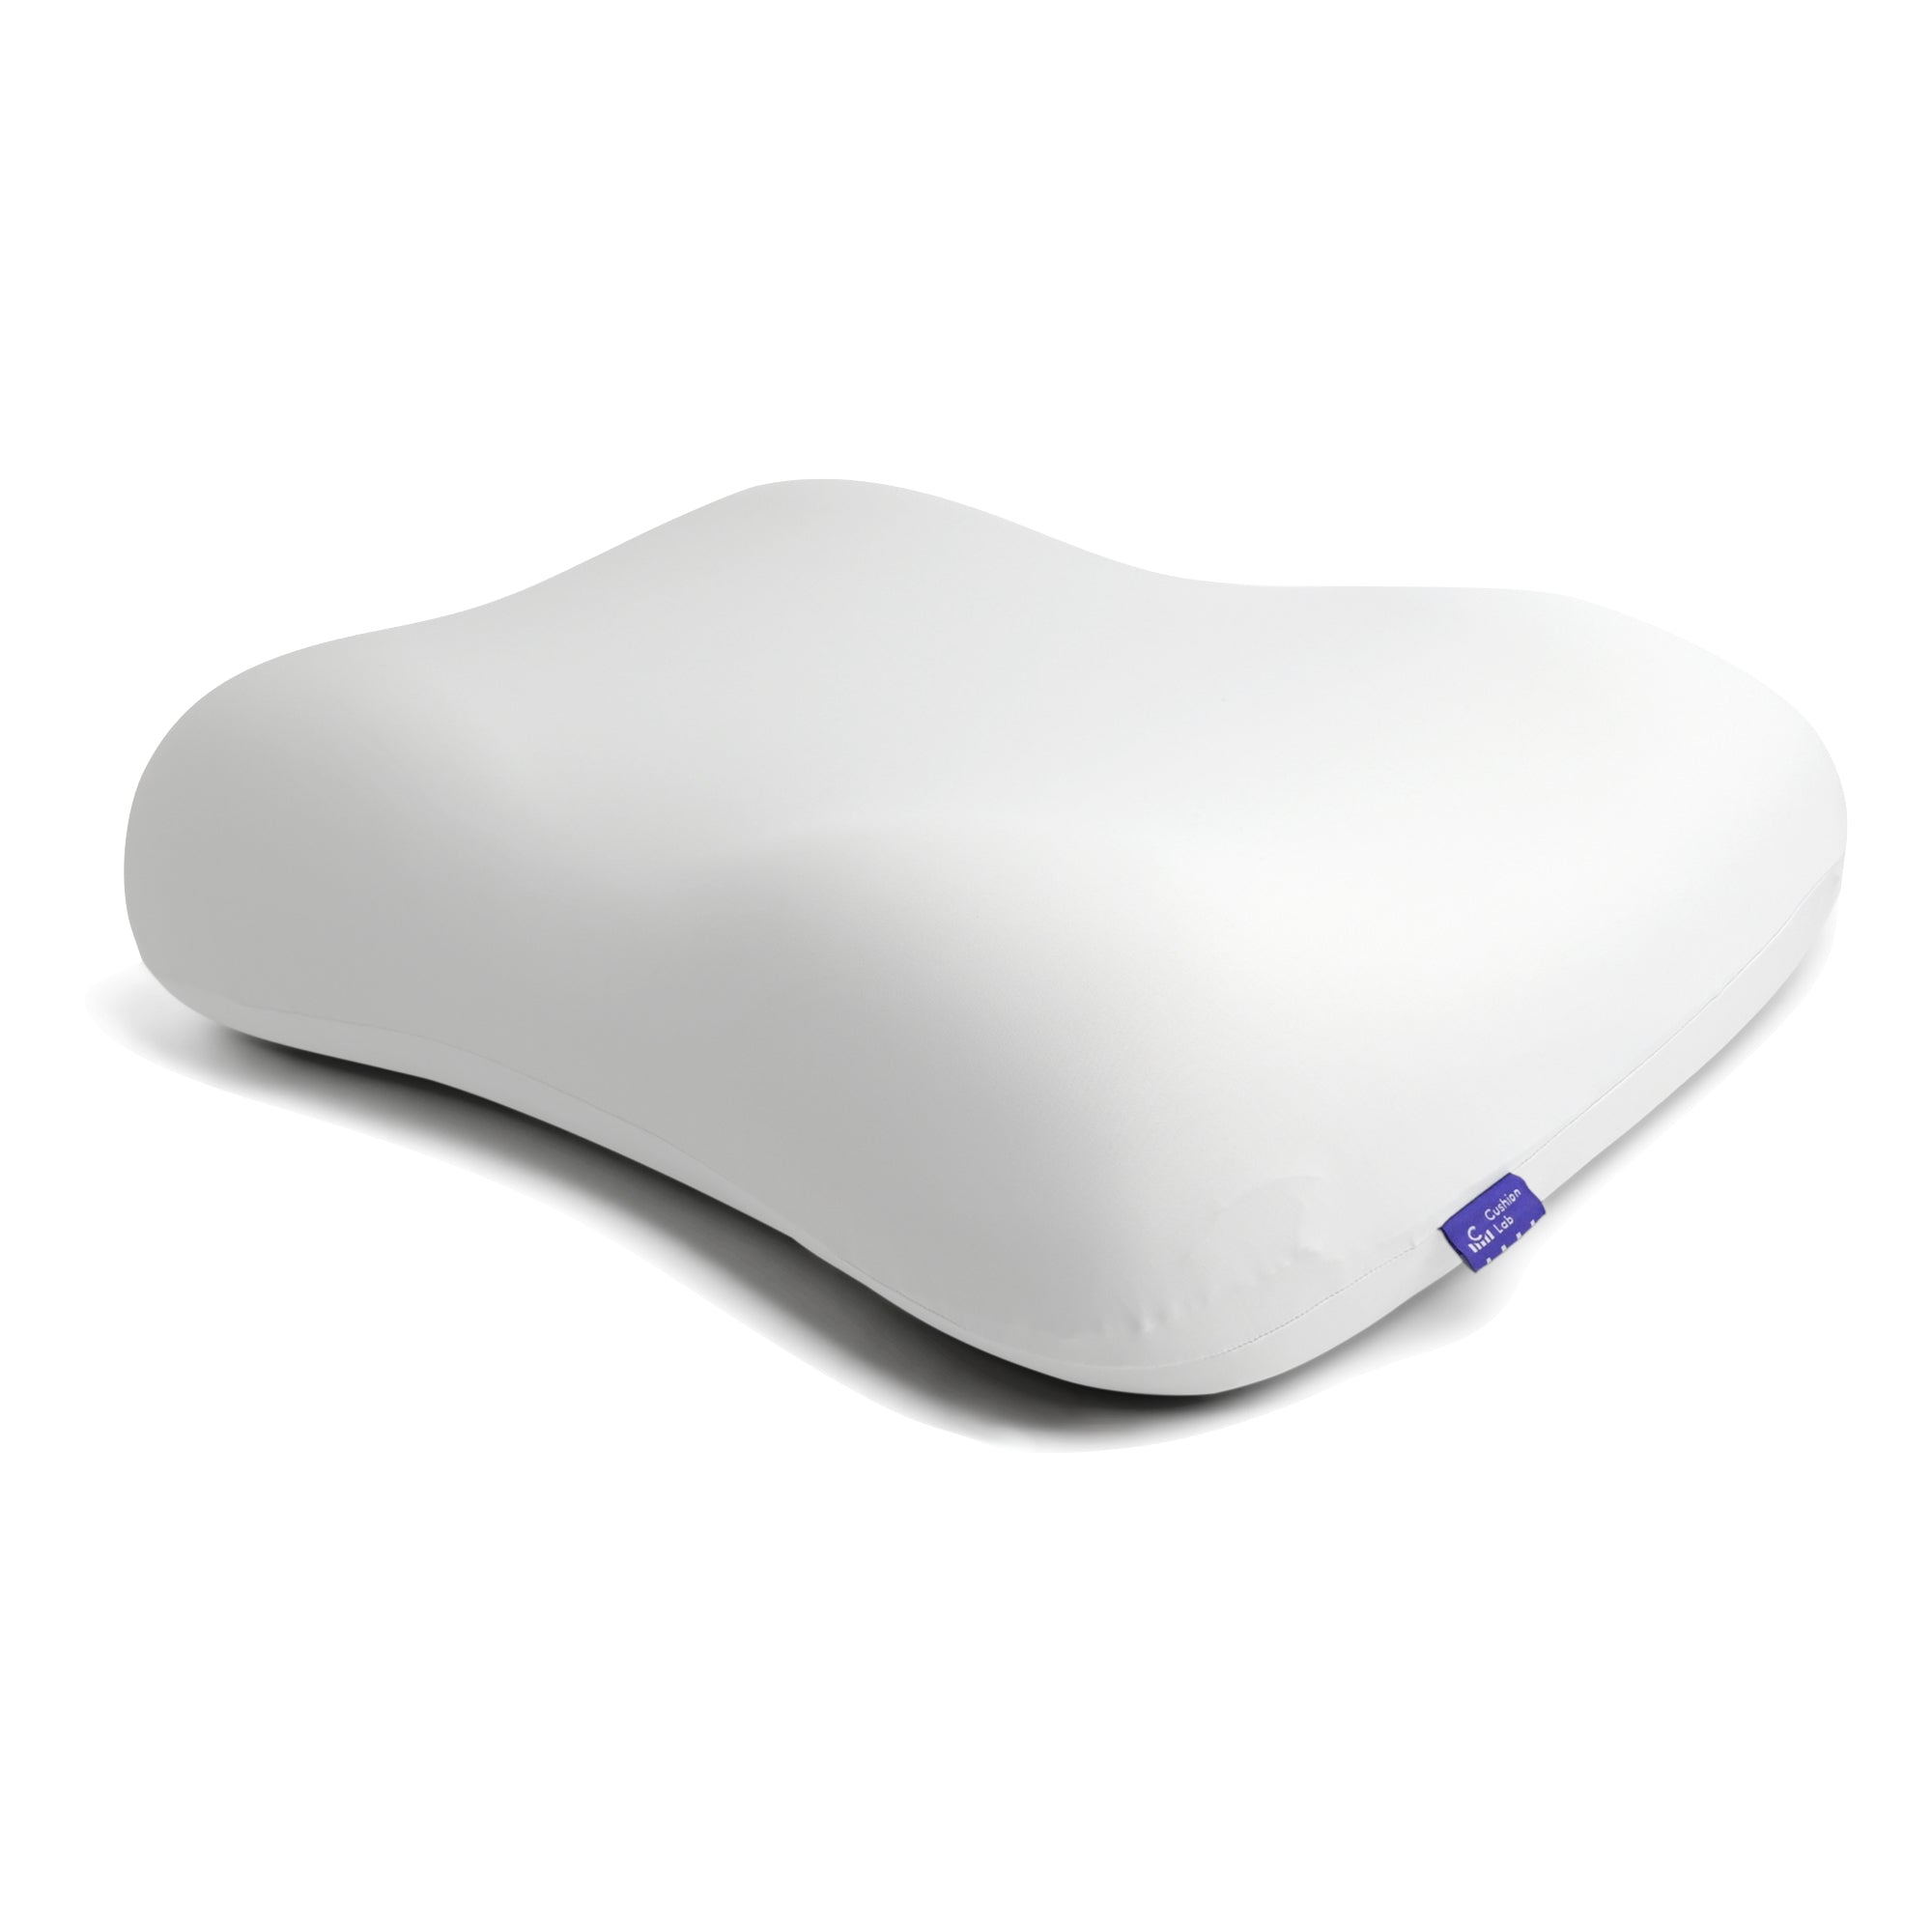 Cushion Lab Ergonomic Travel Neck Pillow